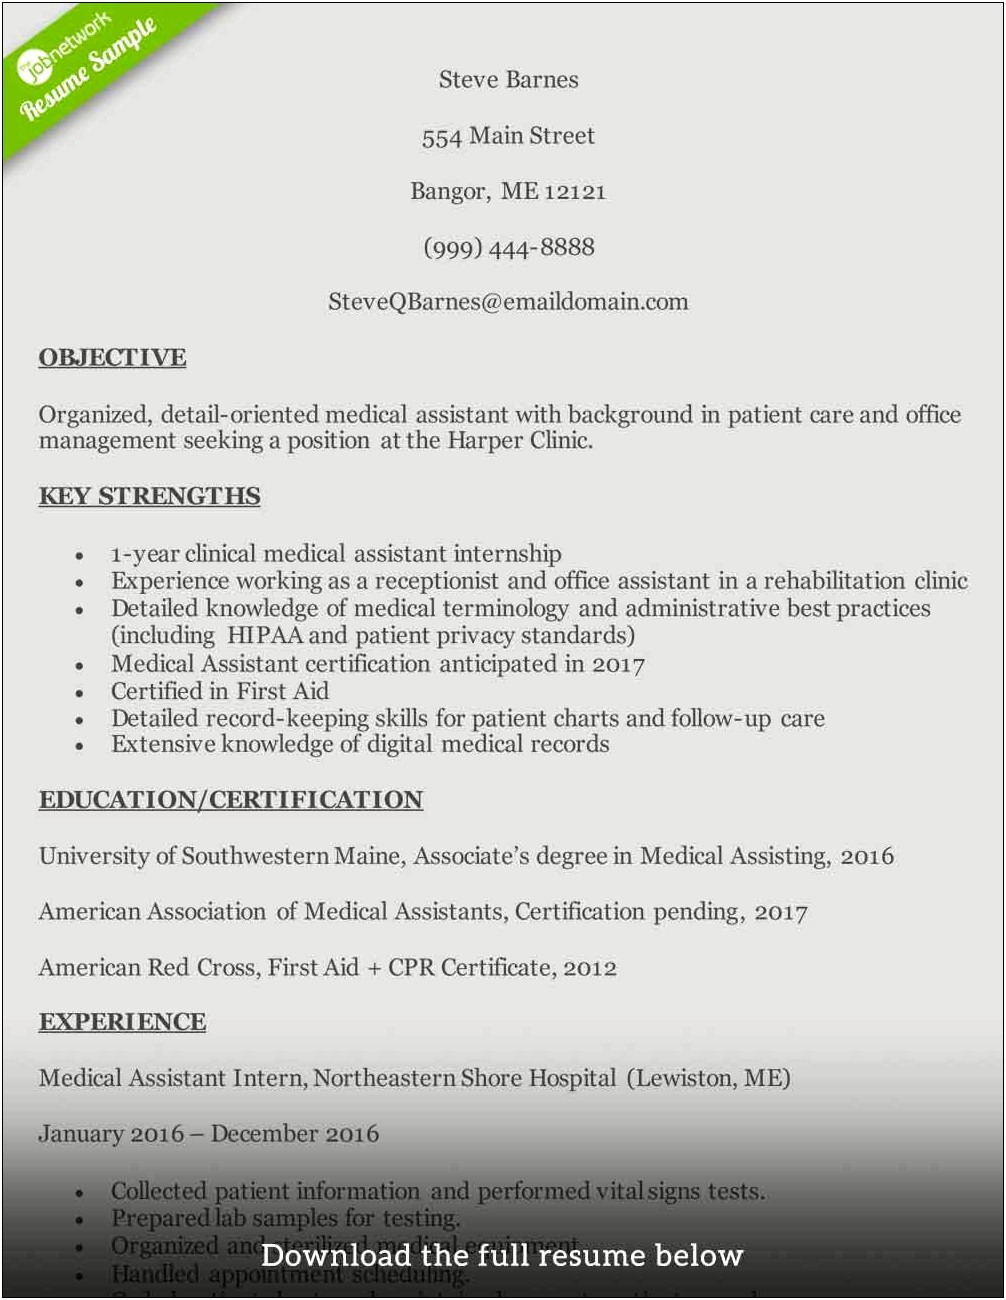 Resume Samples Medical Assistant Entry Level